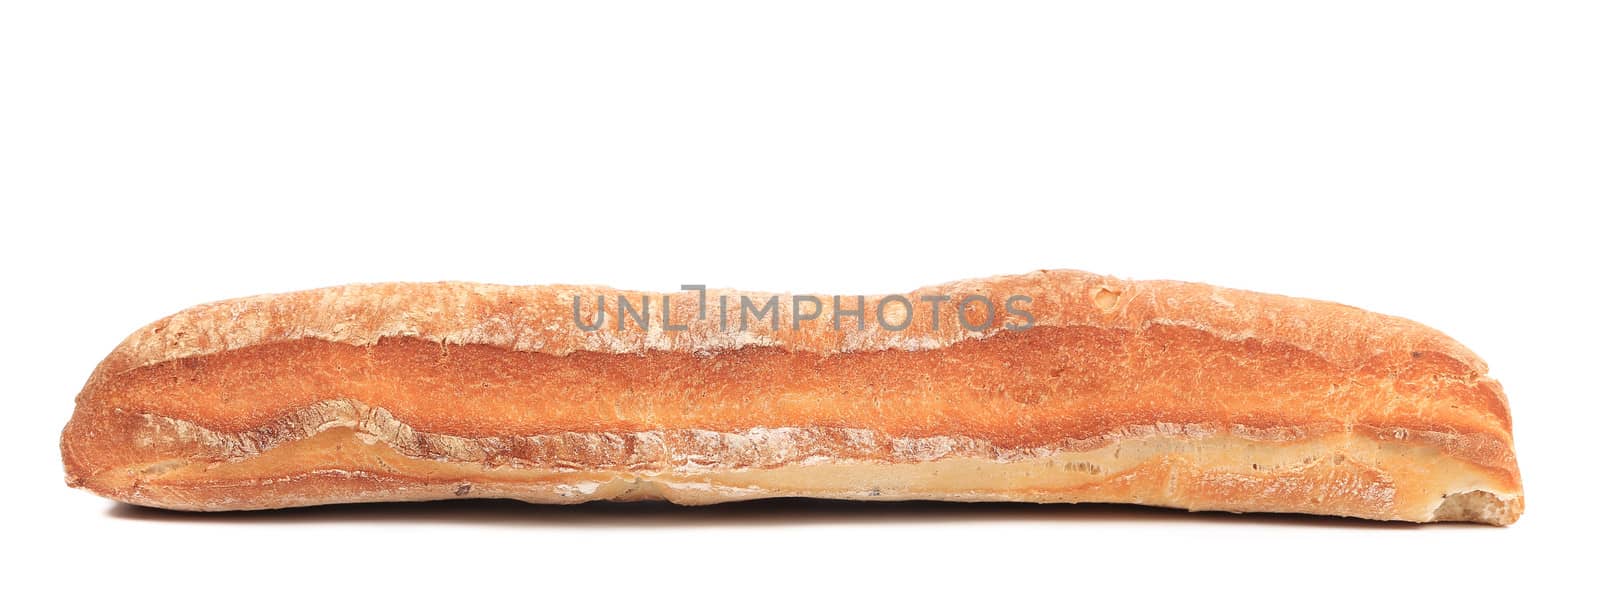 Crackling white bread. by indigolotos